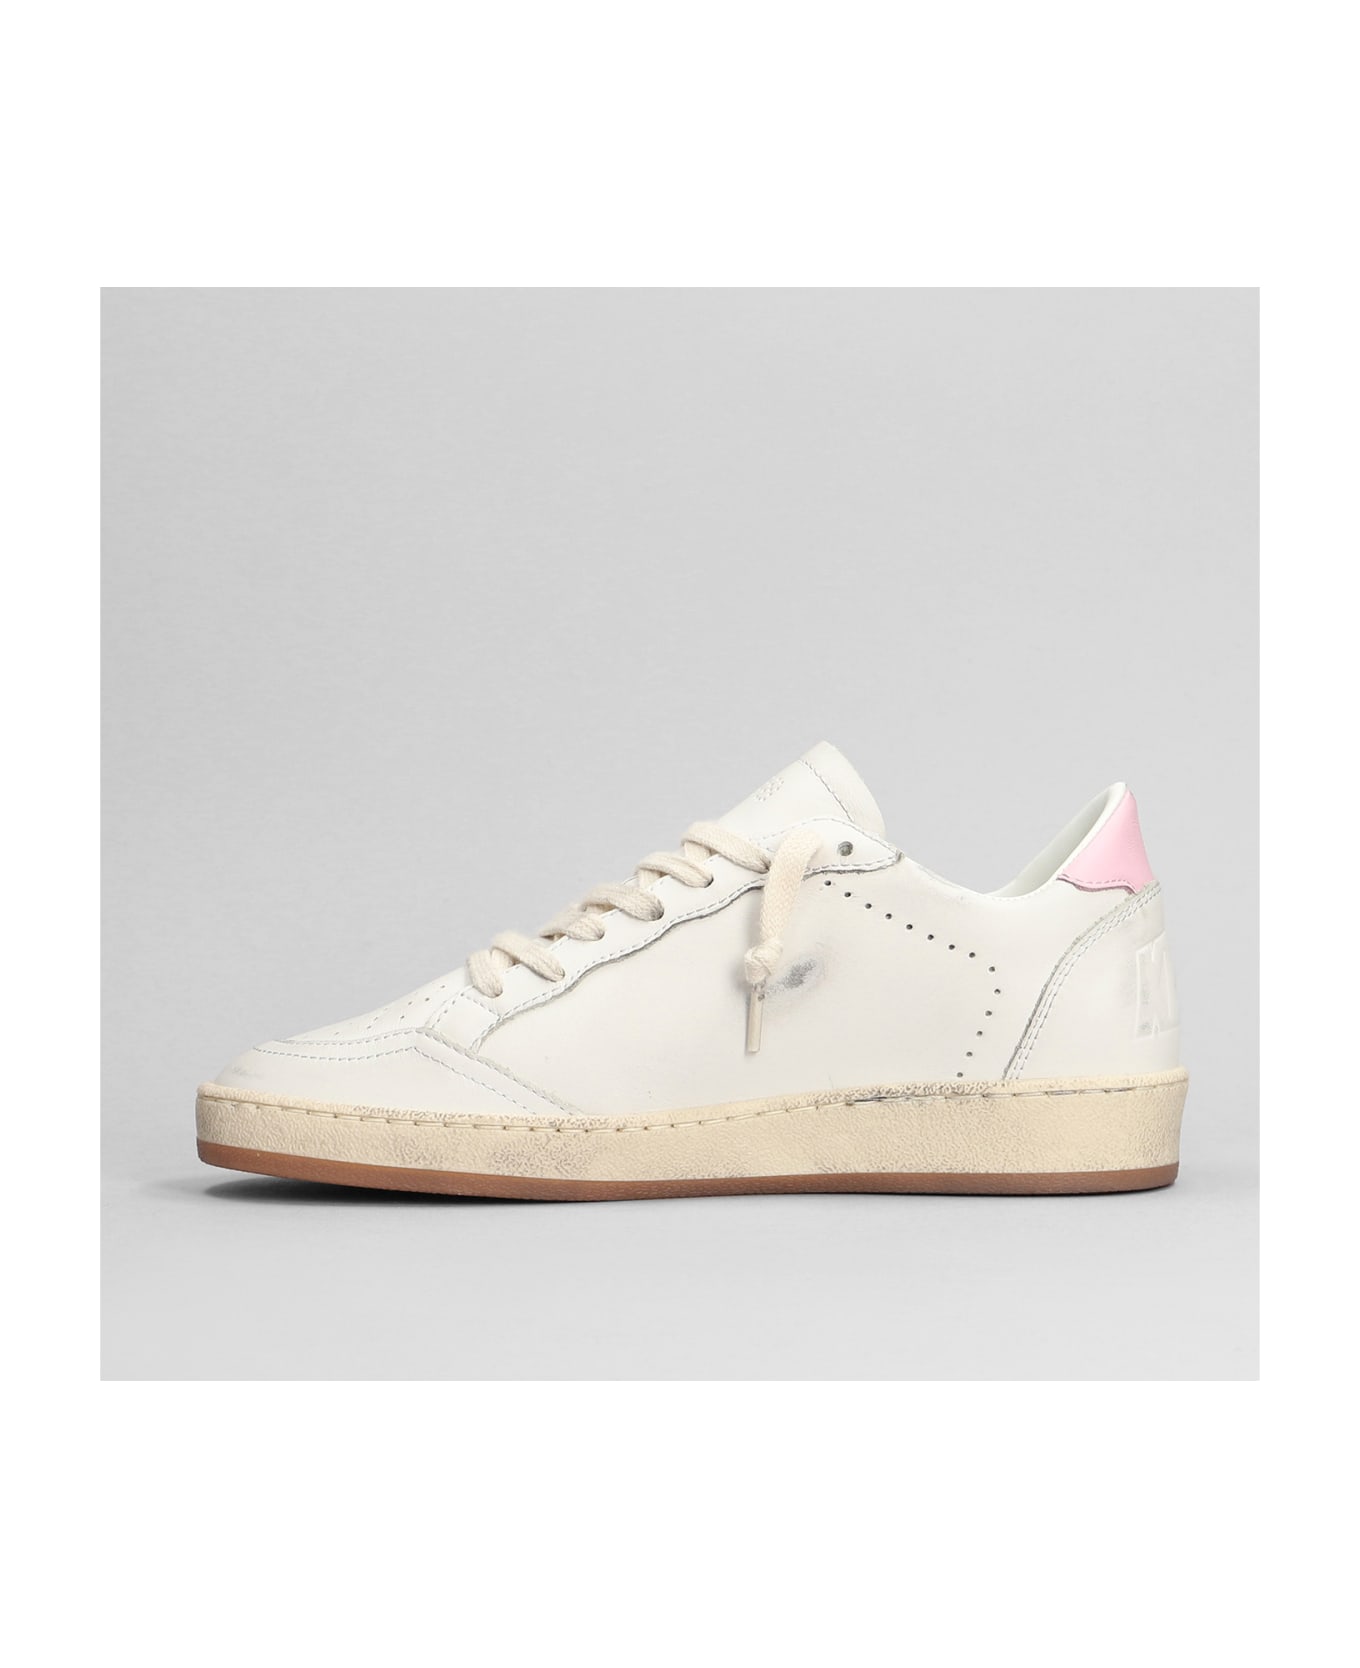 Golden Goose Ball Star Sneakers In White Leather - white スニーカー